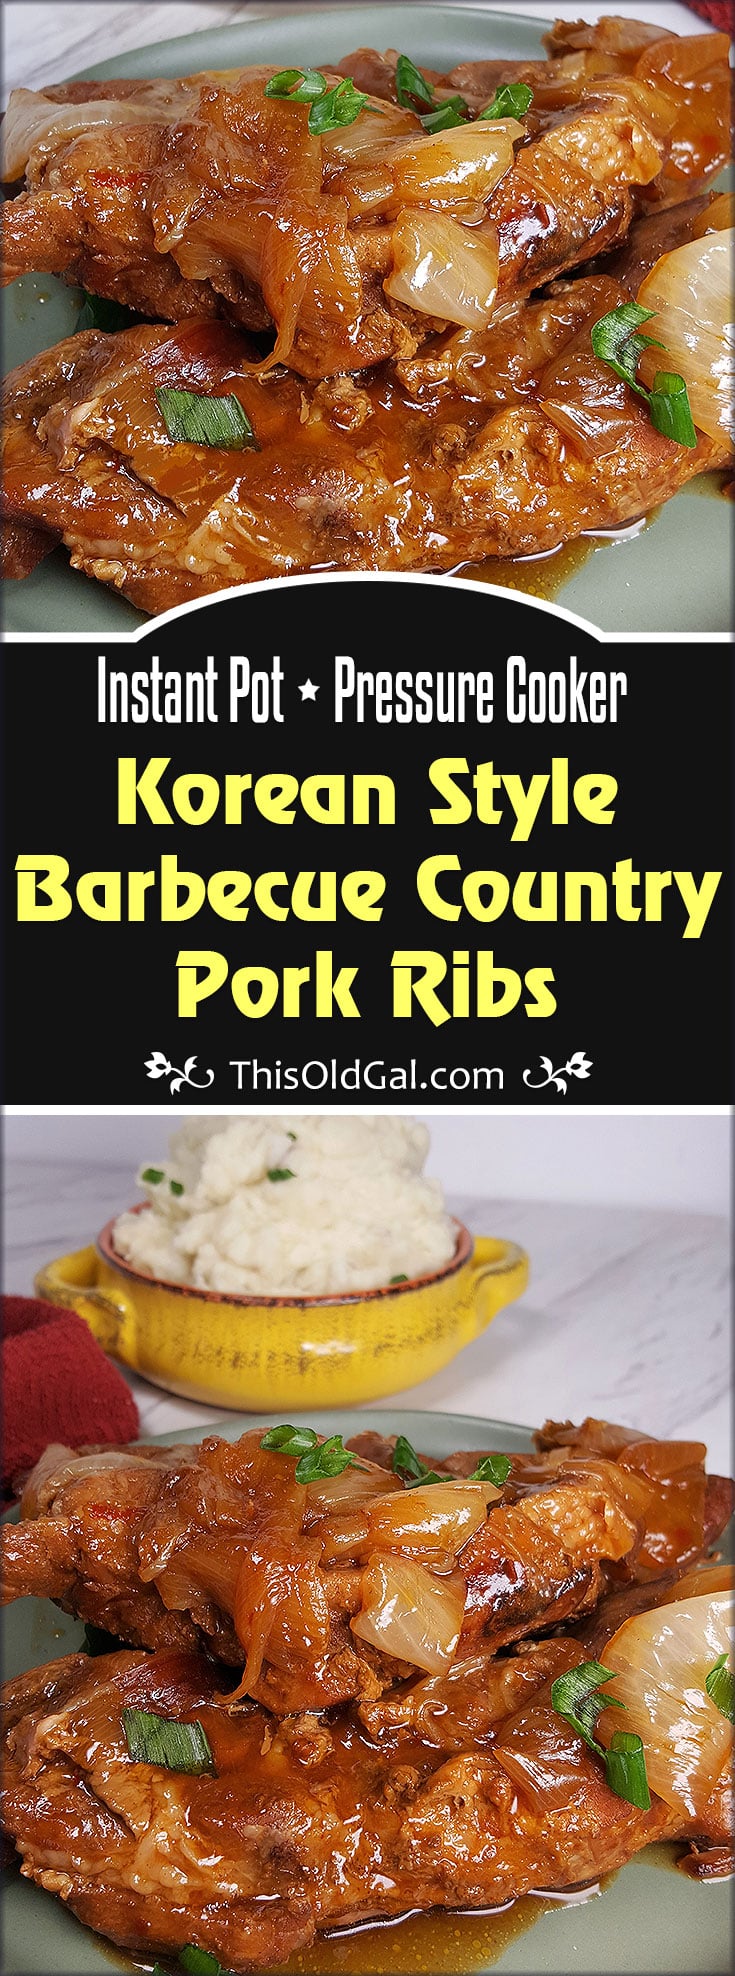 Pork Ribs Nilagain Pressure Cooker - Pressure Cooker ...